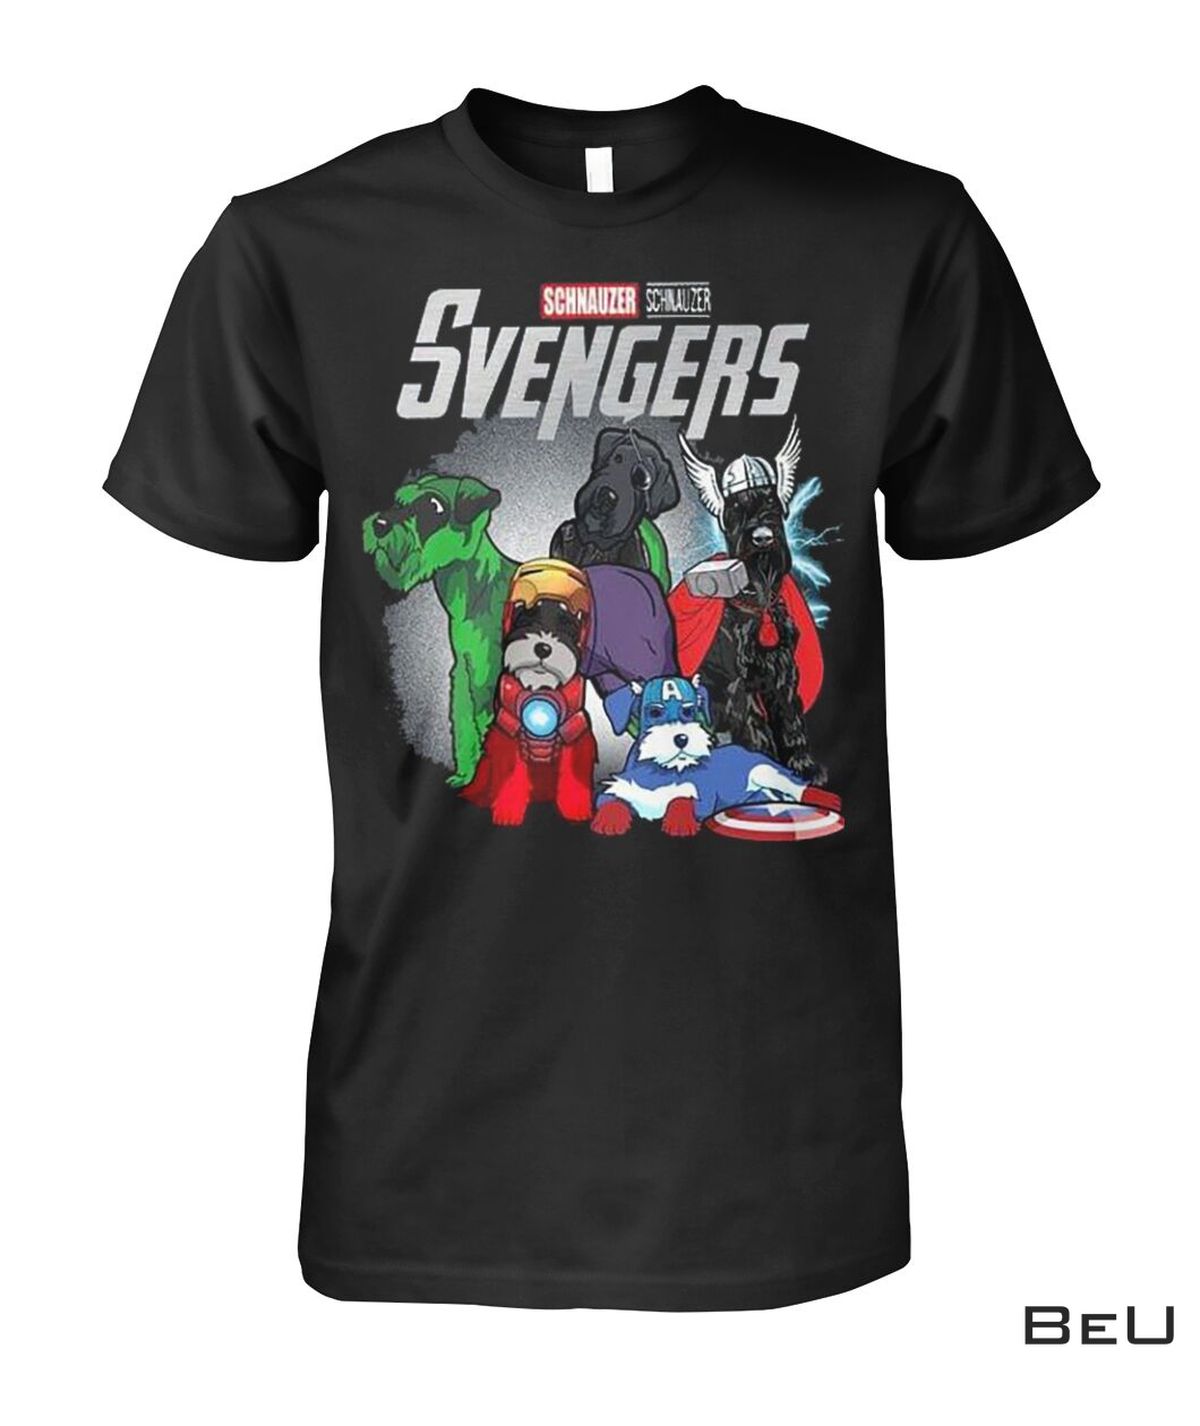 Schnauzer Svengers Avengers Shirt